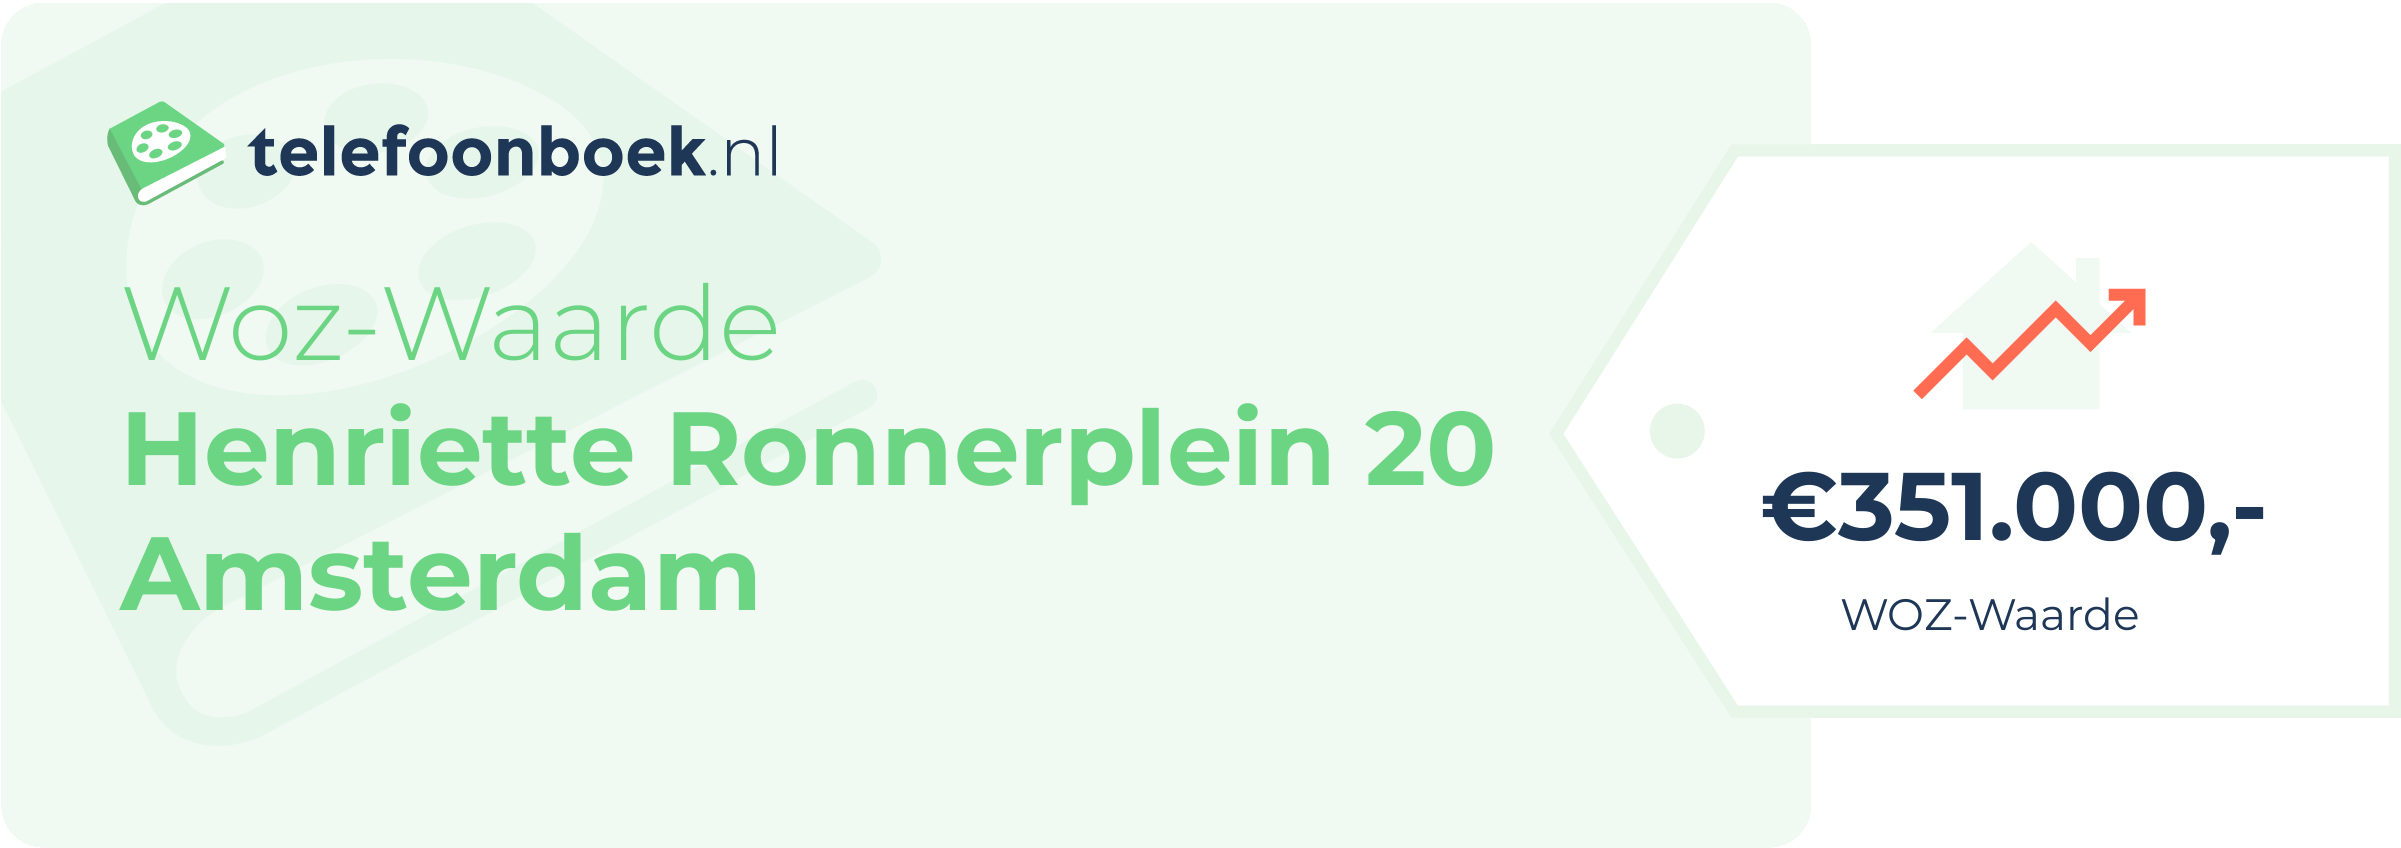 WOZ-waarde Henriette Ronnerplein 20 Amsterdam